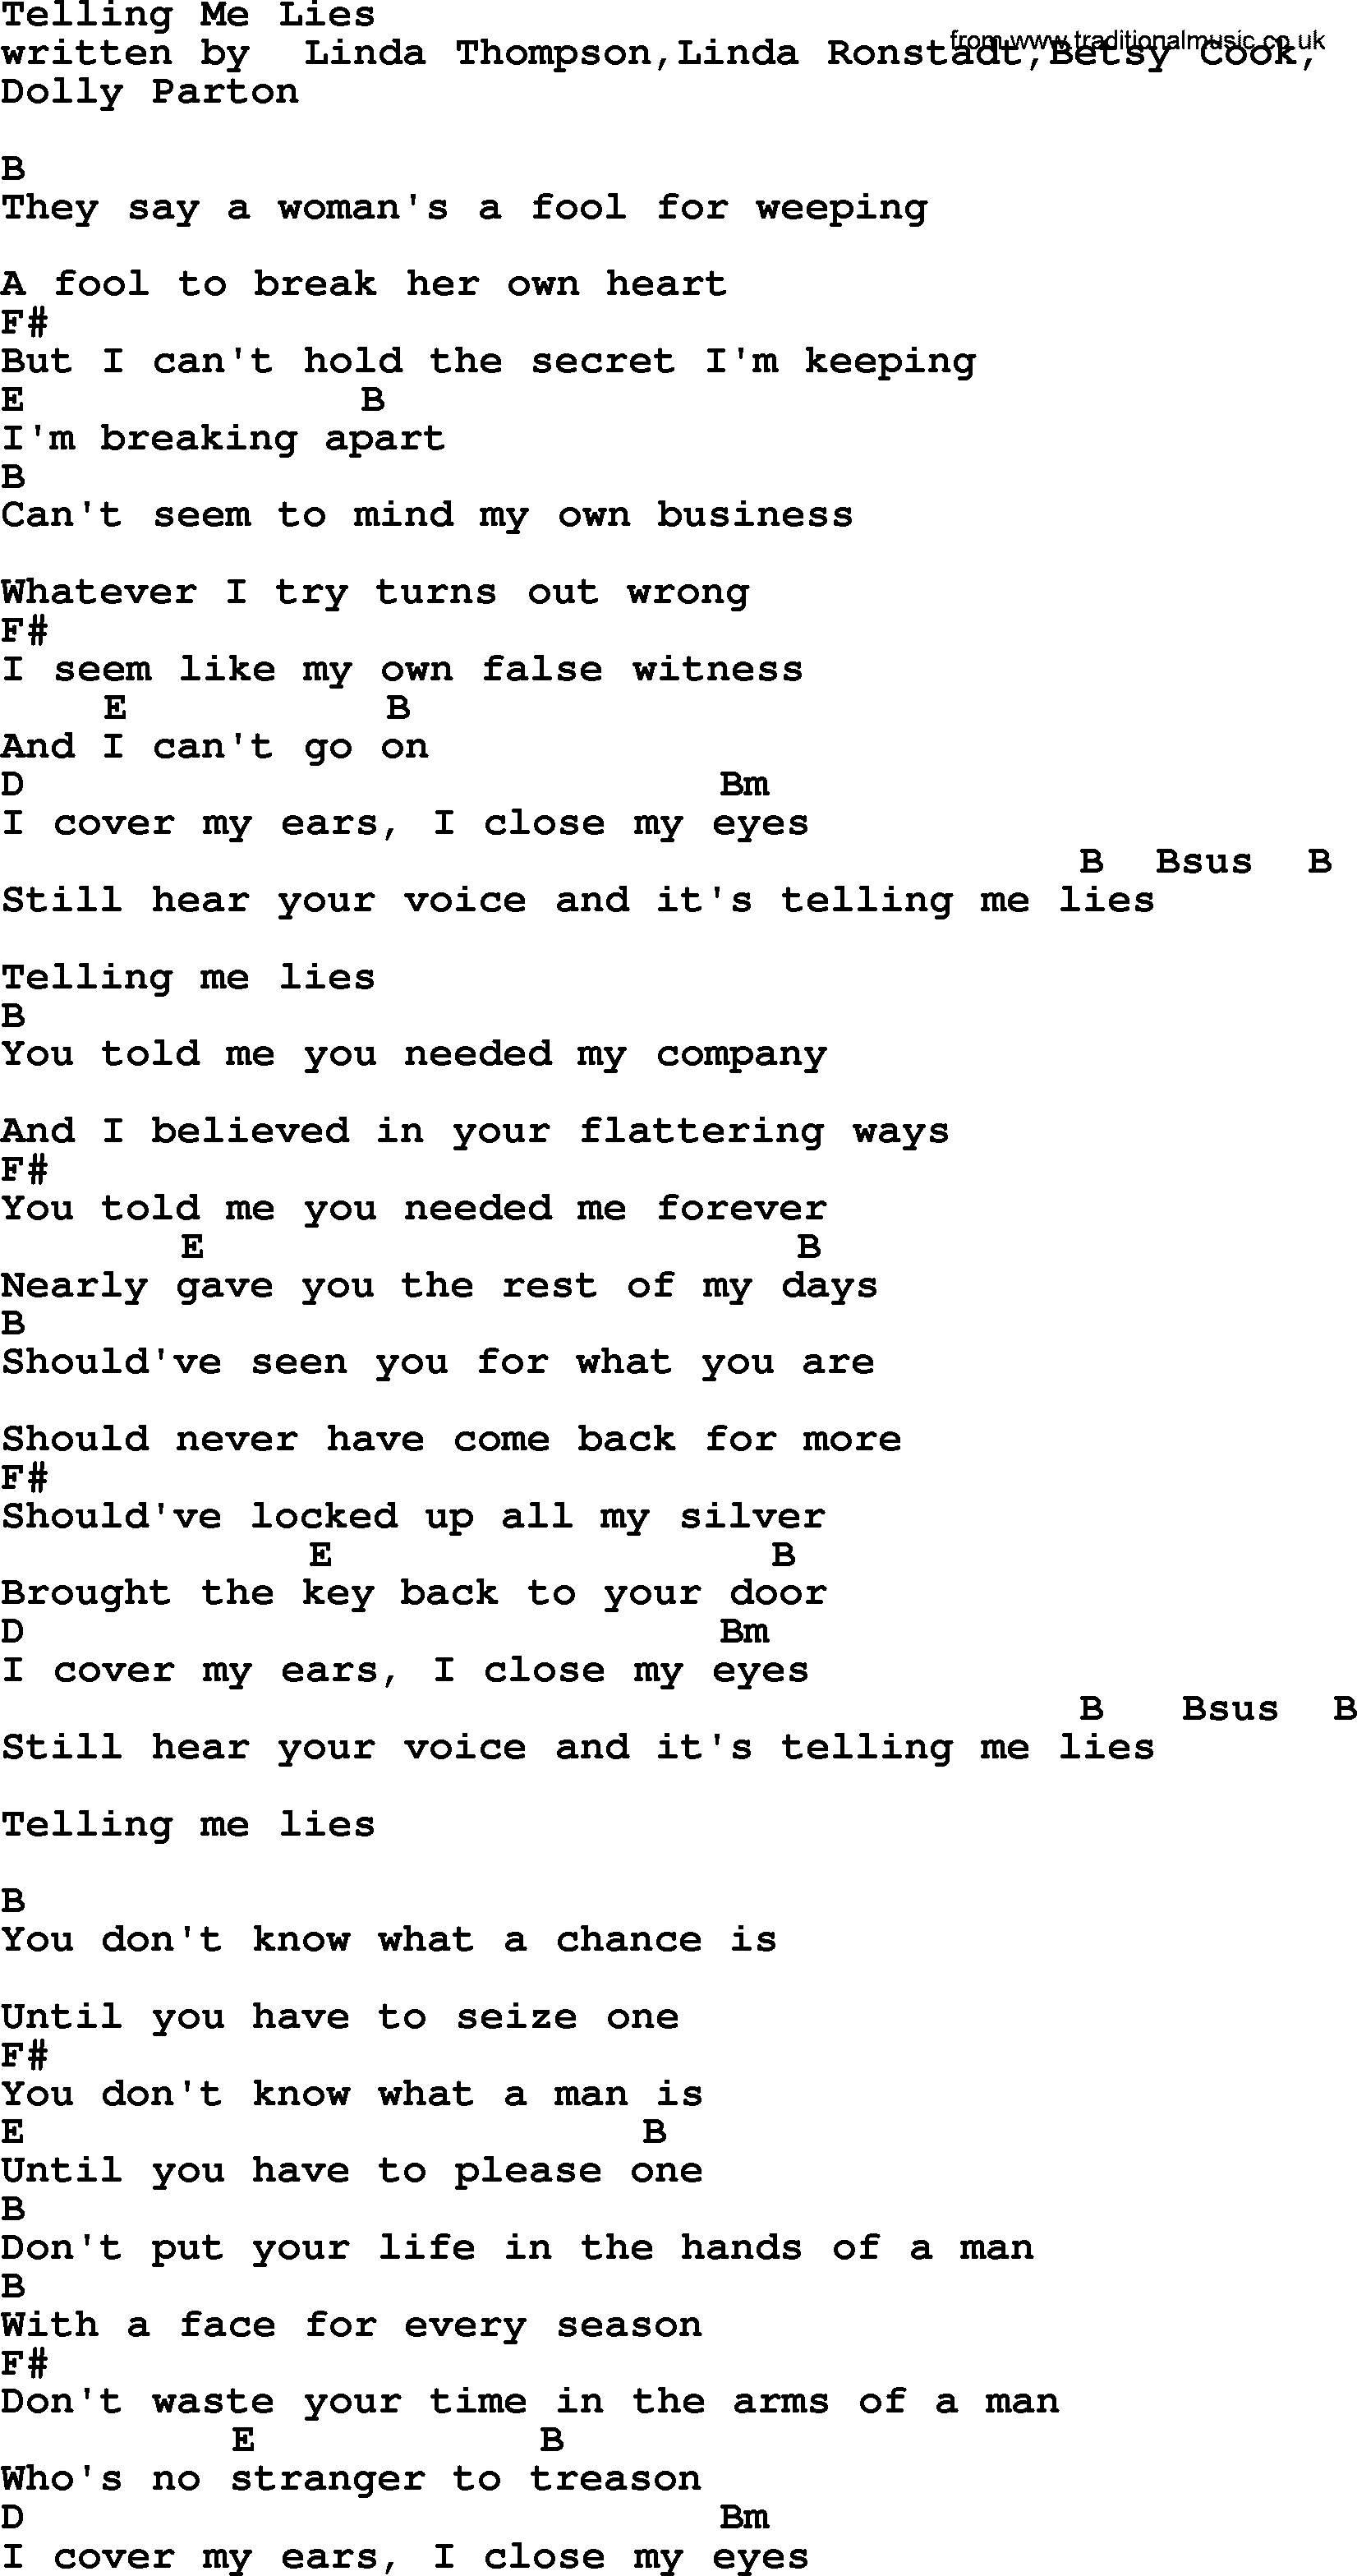 Emmylou Harris song: Telling Me Lies lyrics and chords